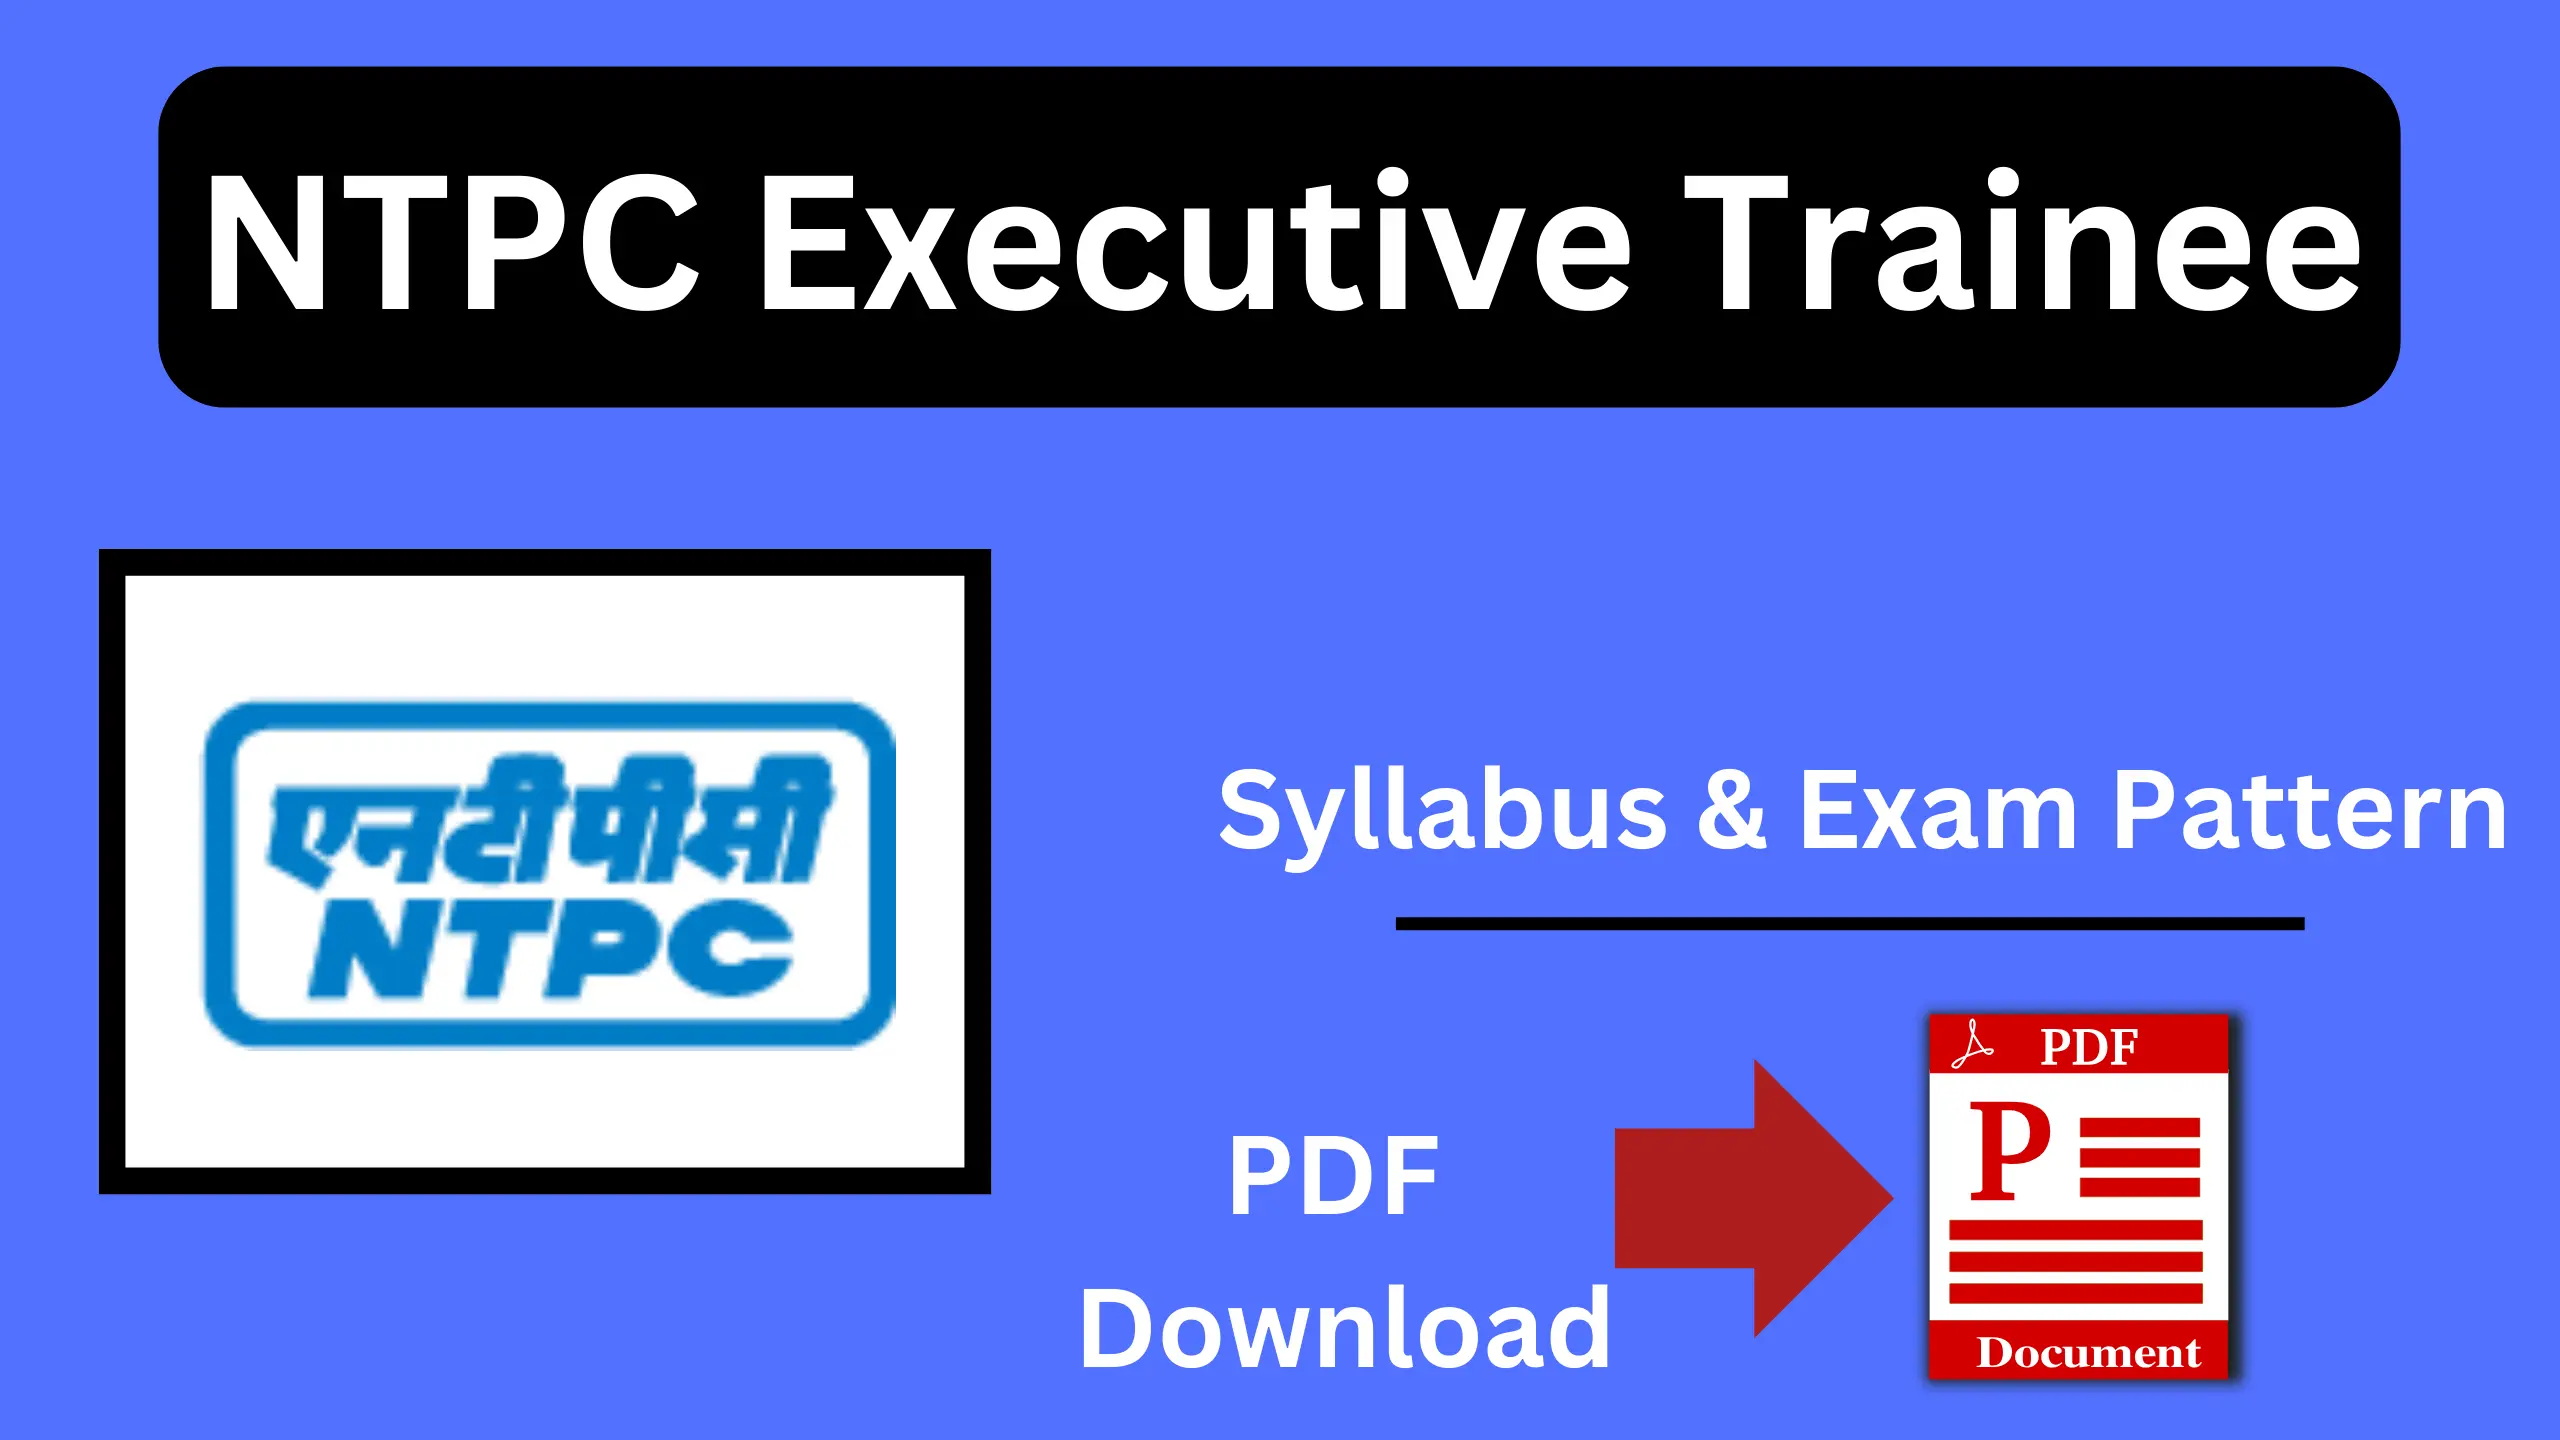 NTPC Executive Trainee Syllabus & Exam Pattern